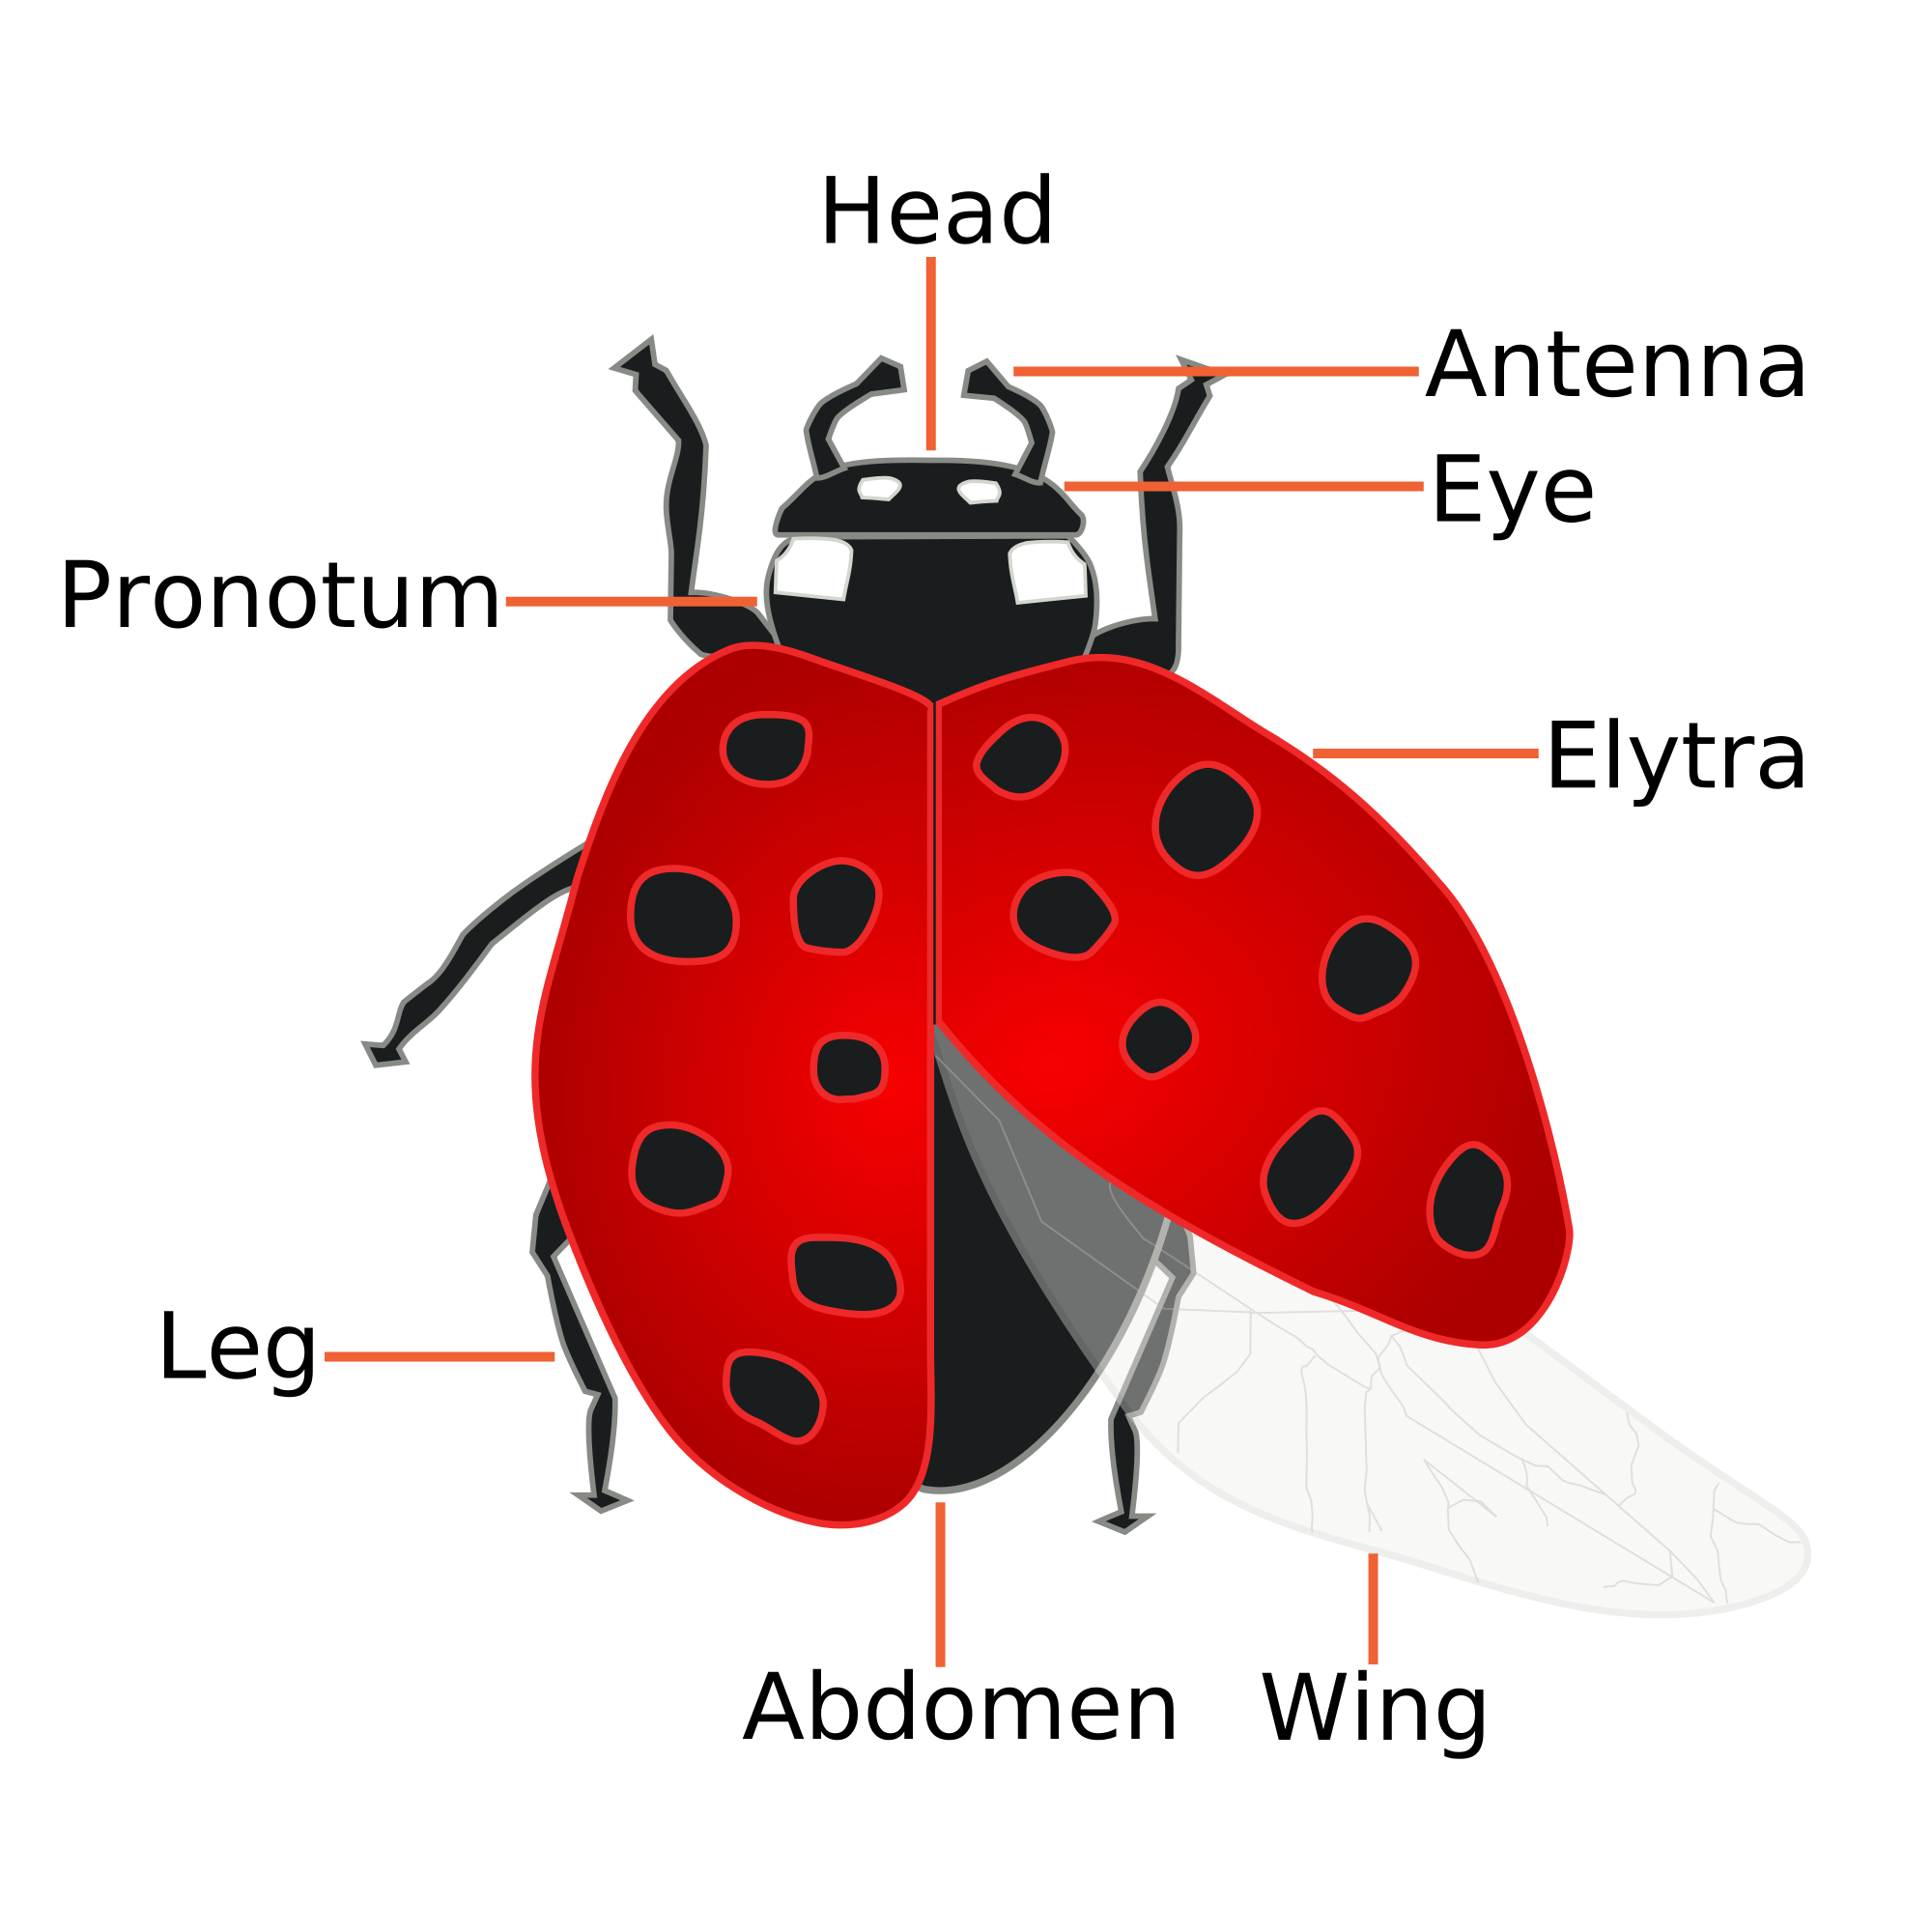 ladybugs clipart bettle